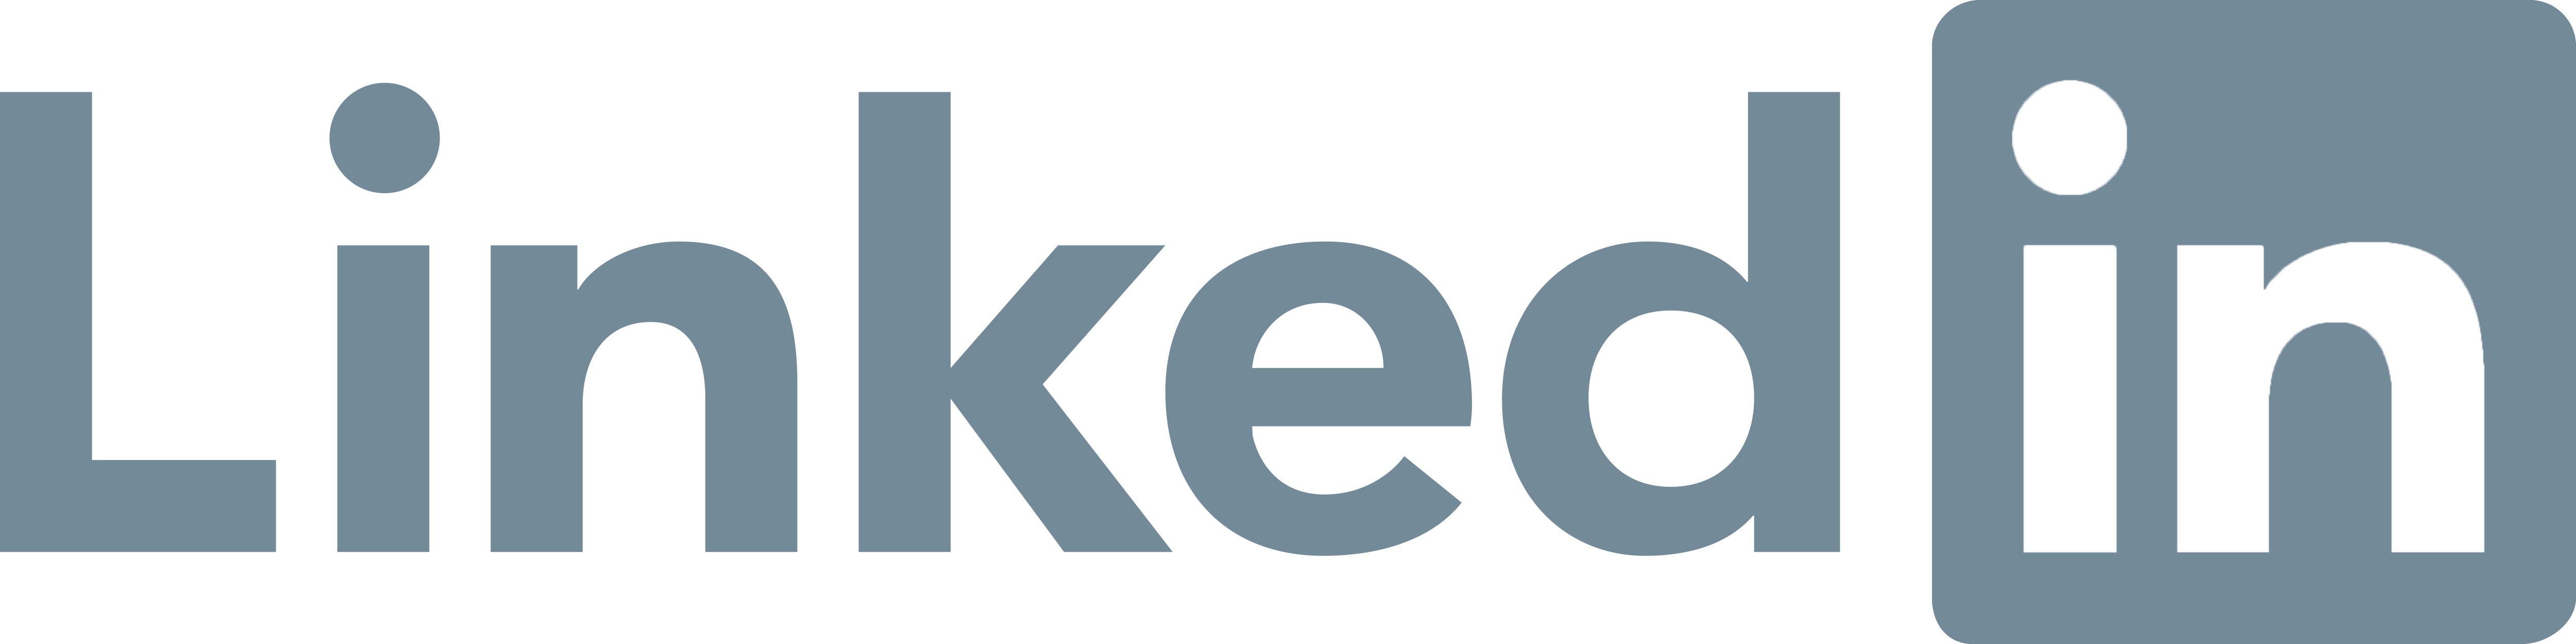 LinkedIN Logo